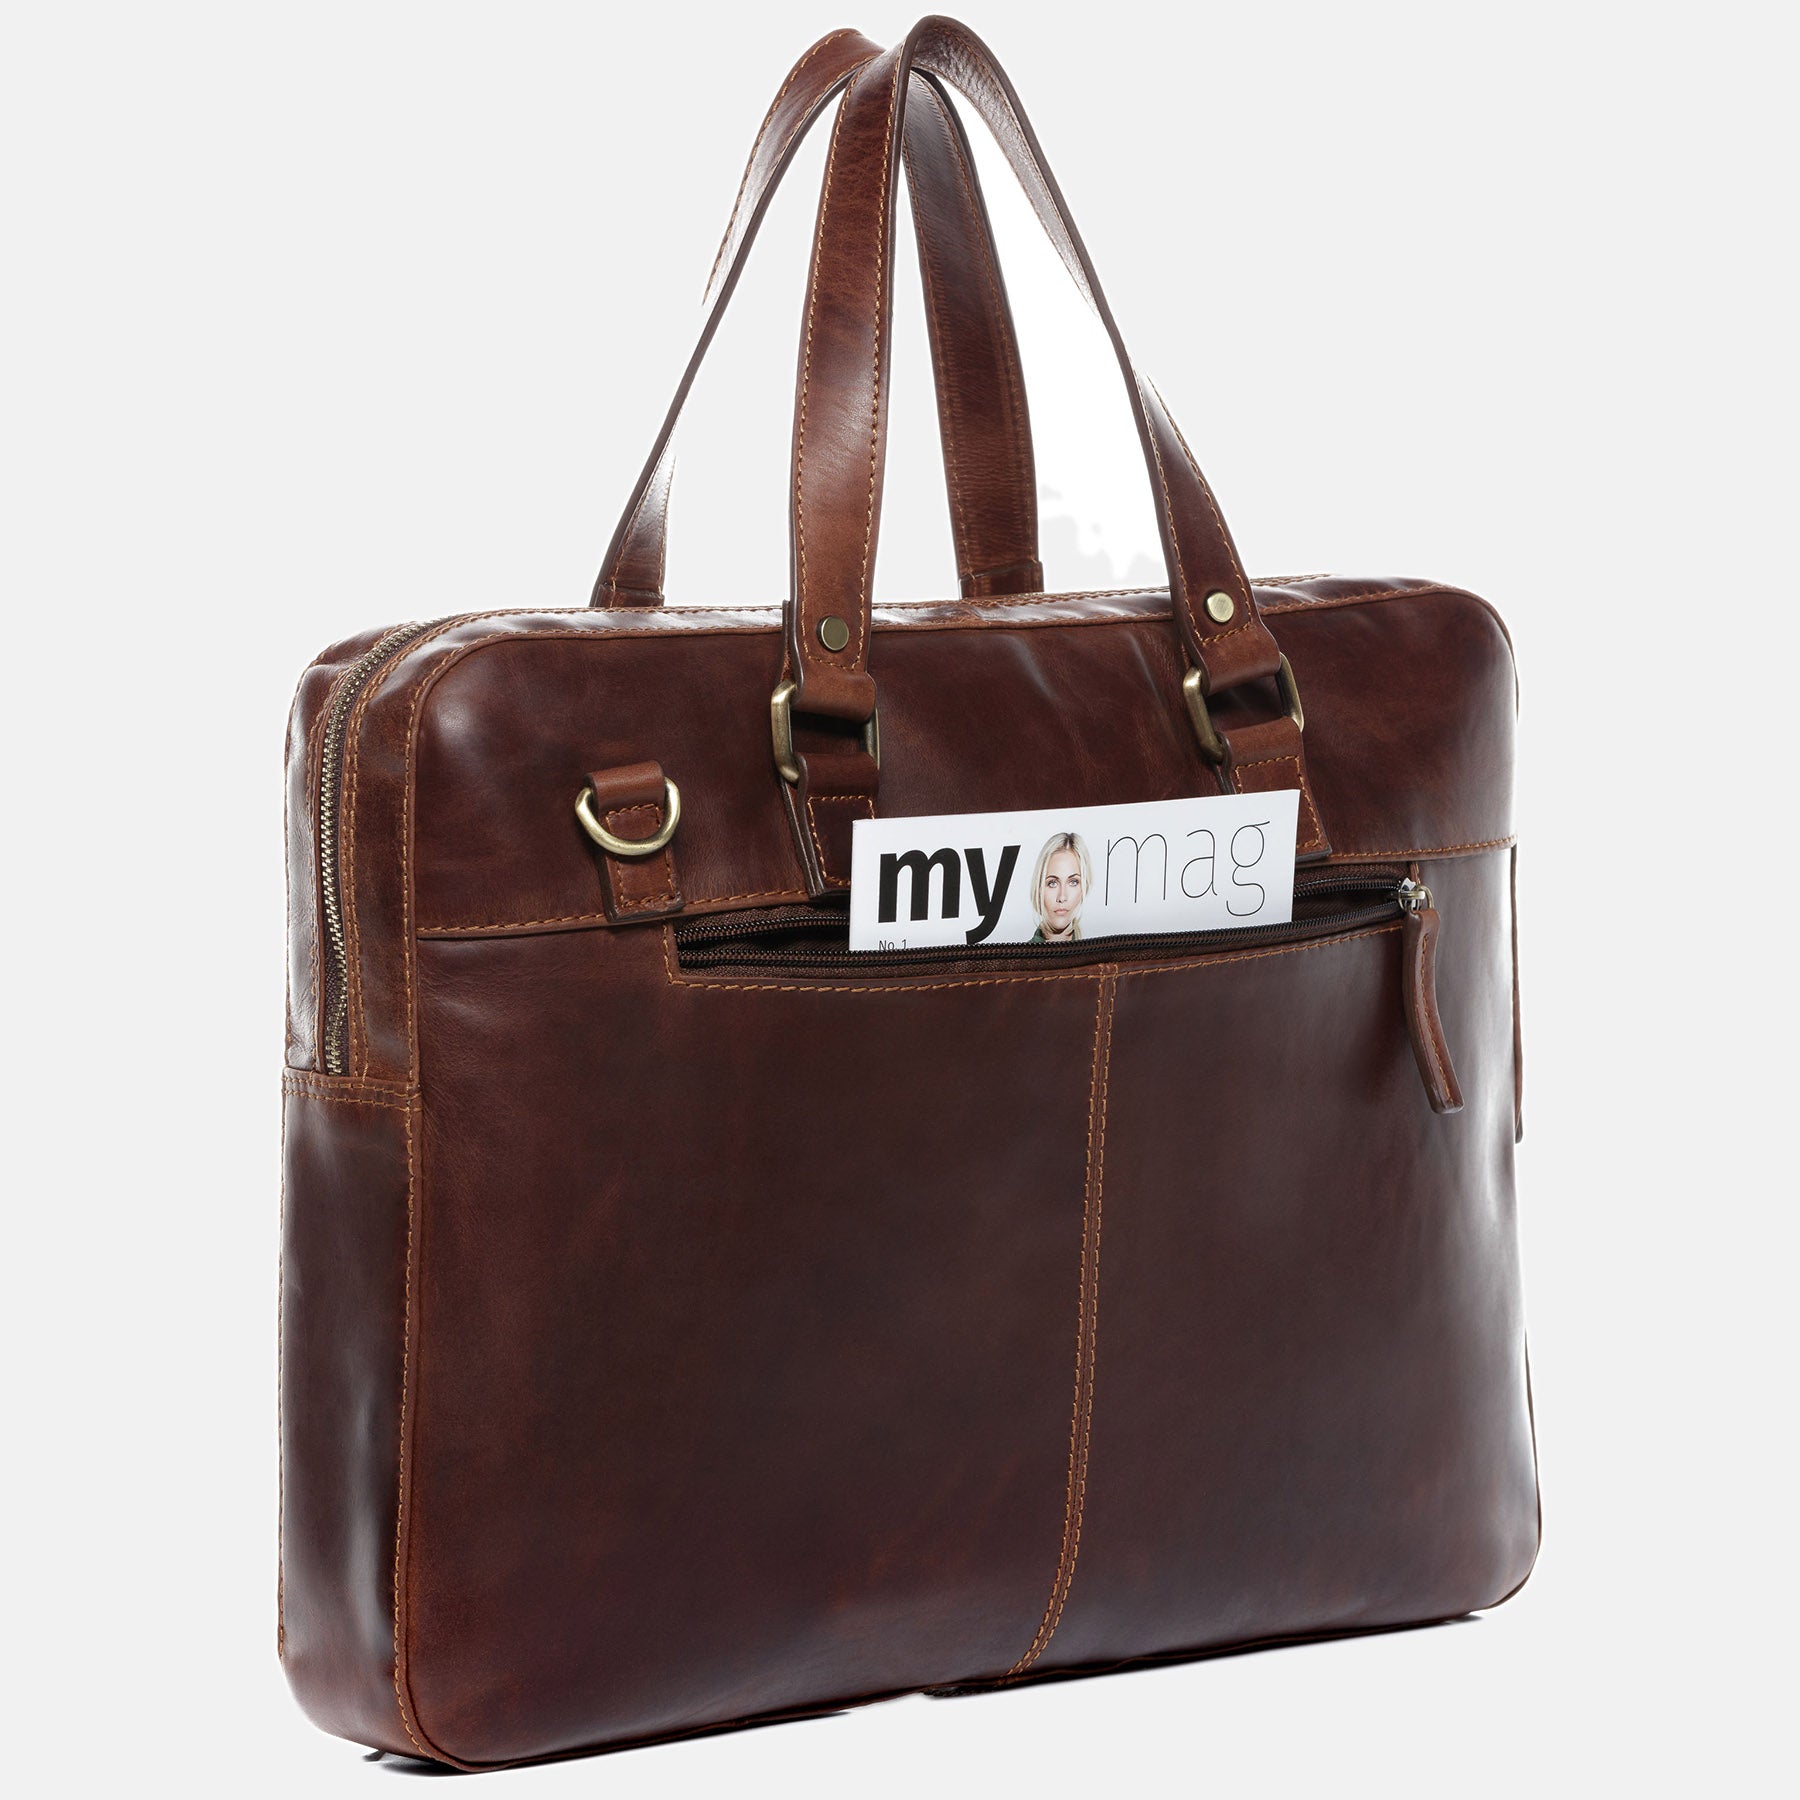 Laptop bag Maguire natural leather brown-cognac